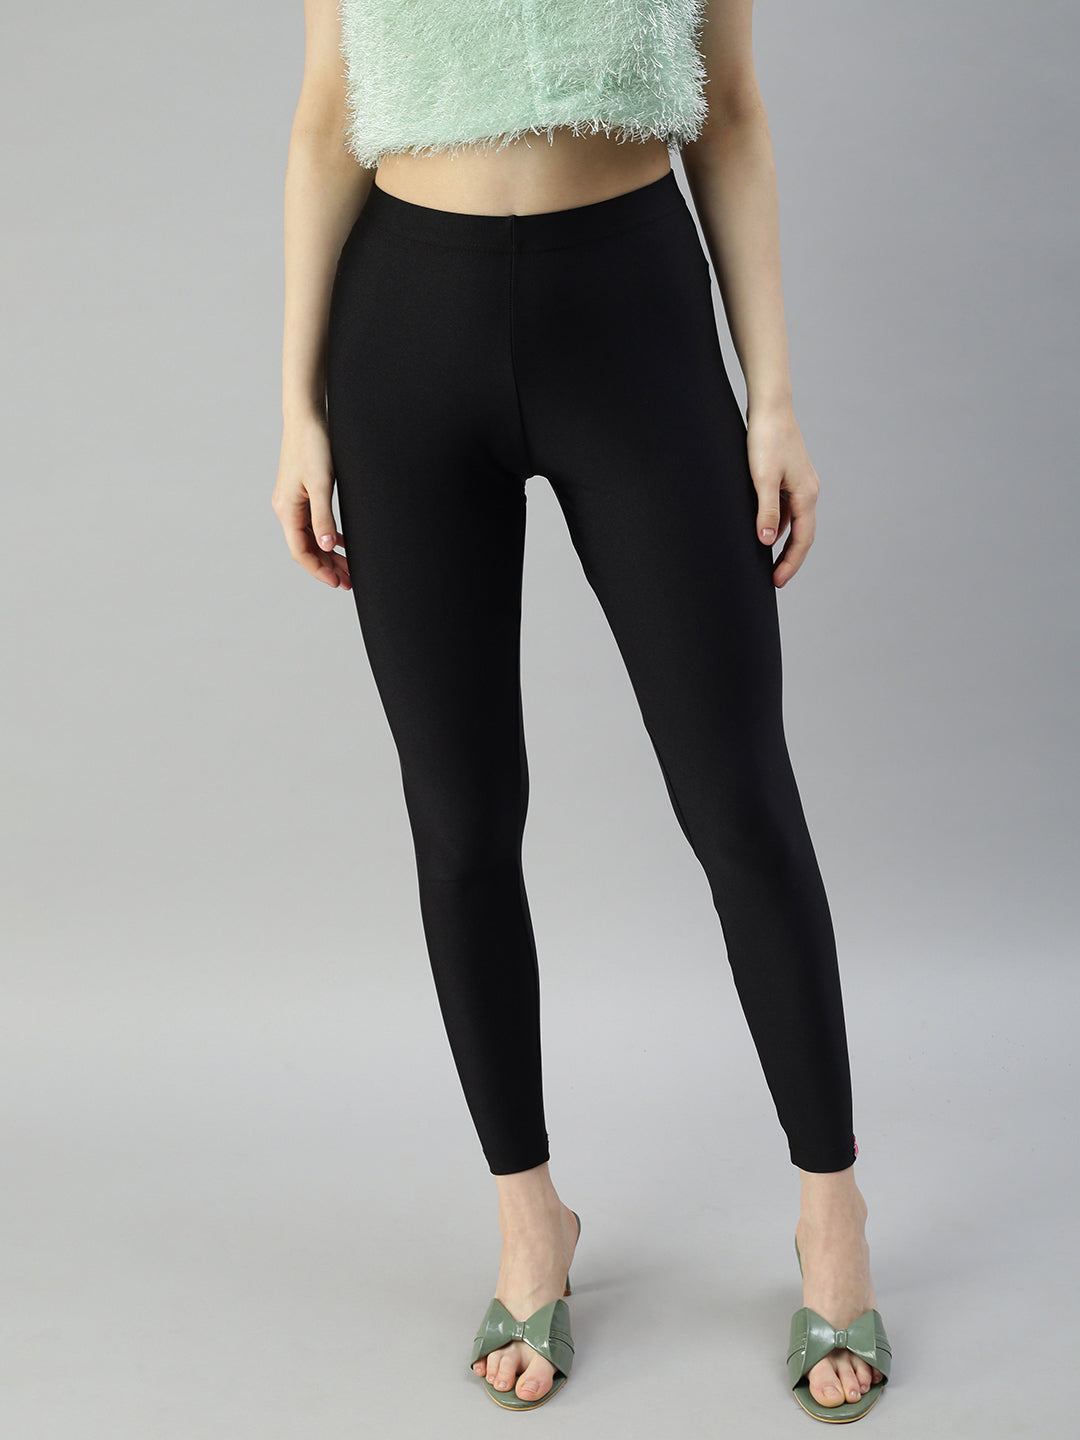 Shop Prisma's Black Shimmer Leggings for a Chic Look